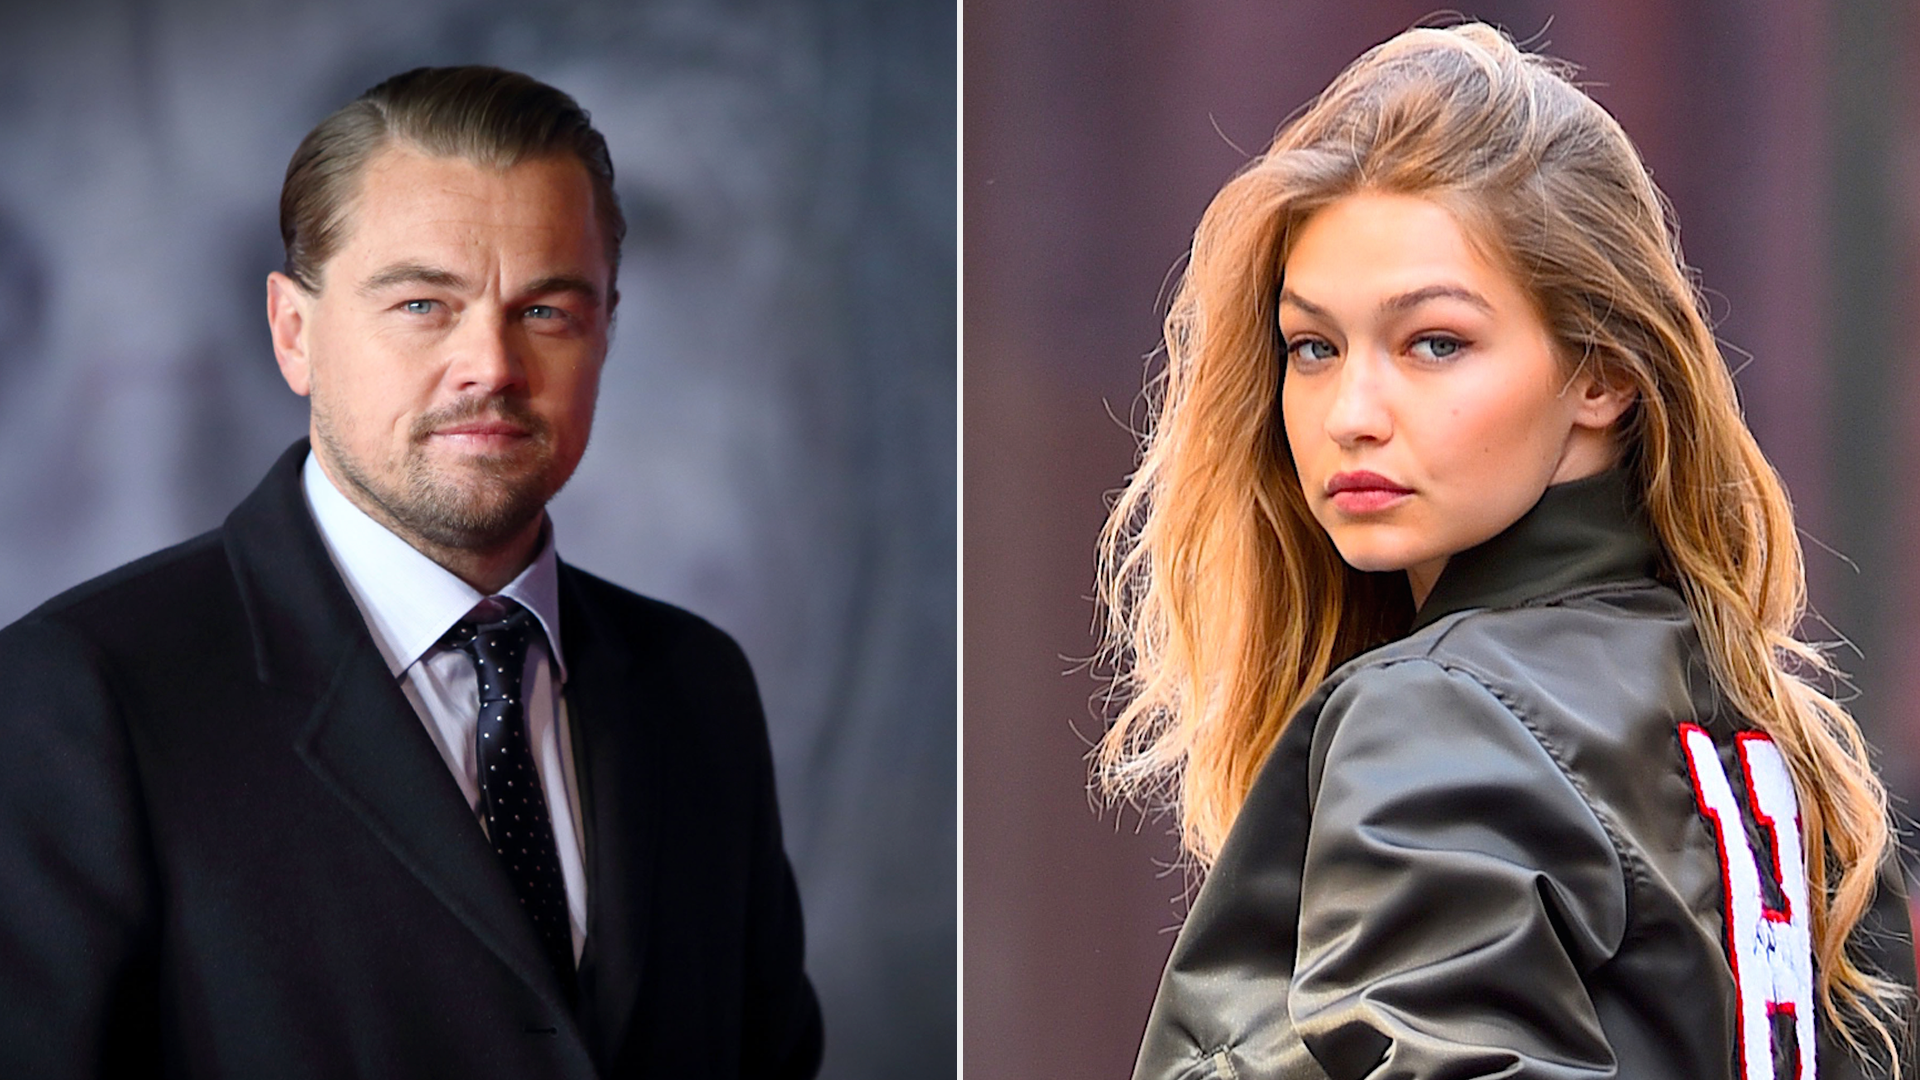 Revelan nuevos detalles del inesperado romance entre Leonardo DiCaprio y  Gigi Hadid - Infobae